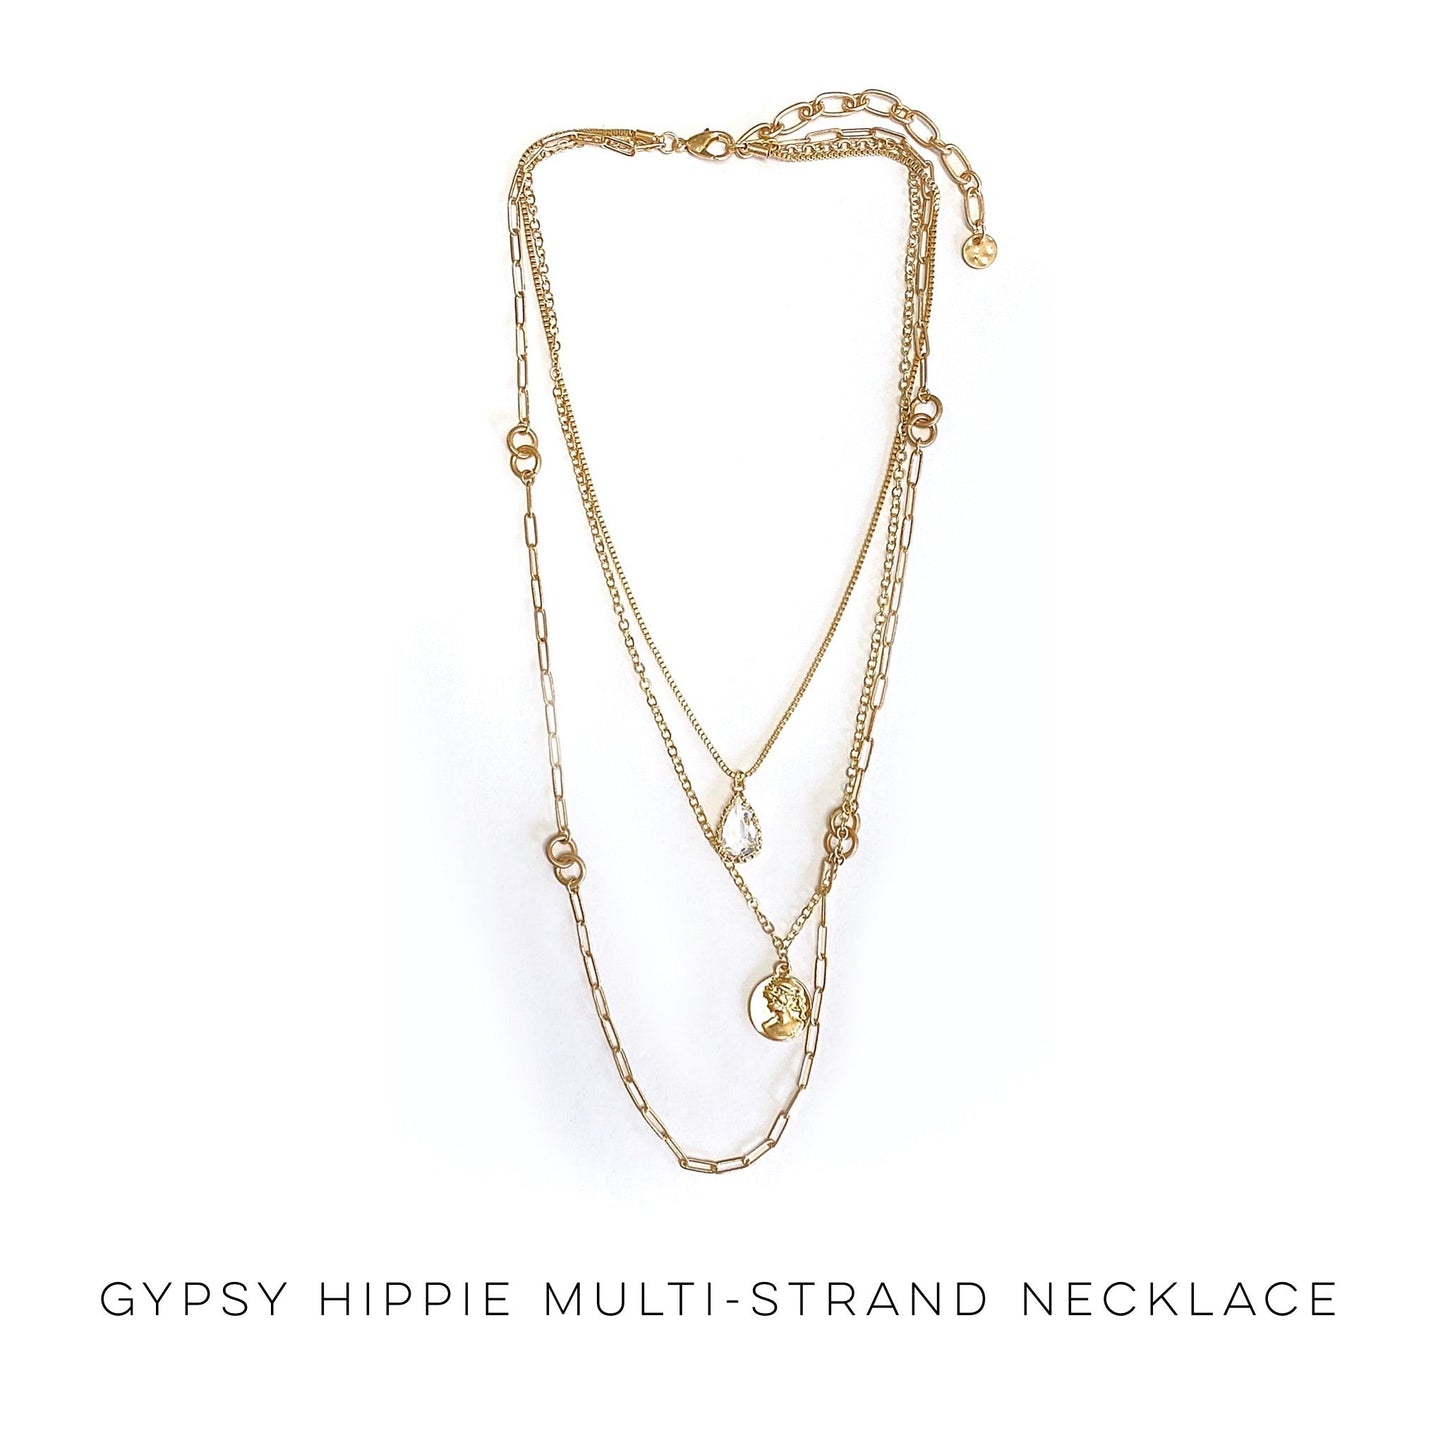 Gypsy Hippie Multi-Strand Necklace